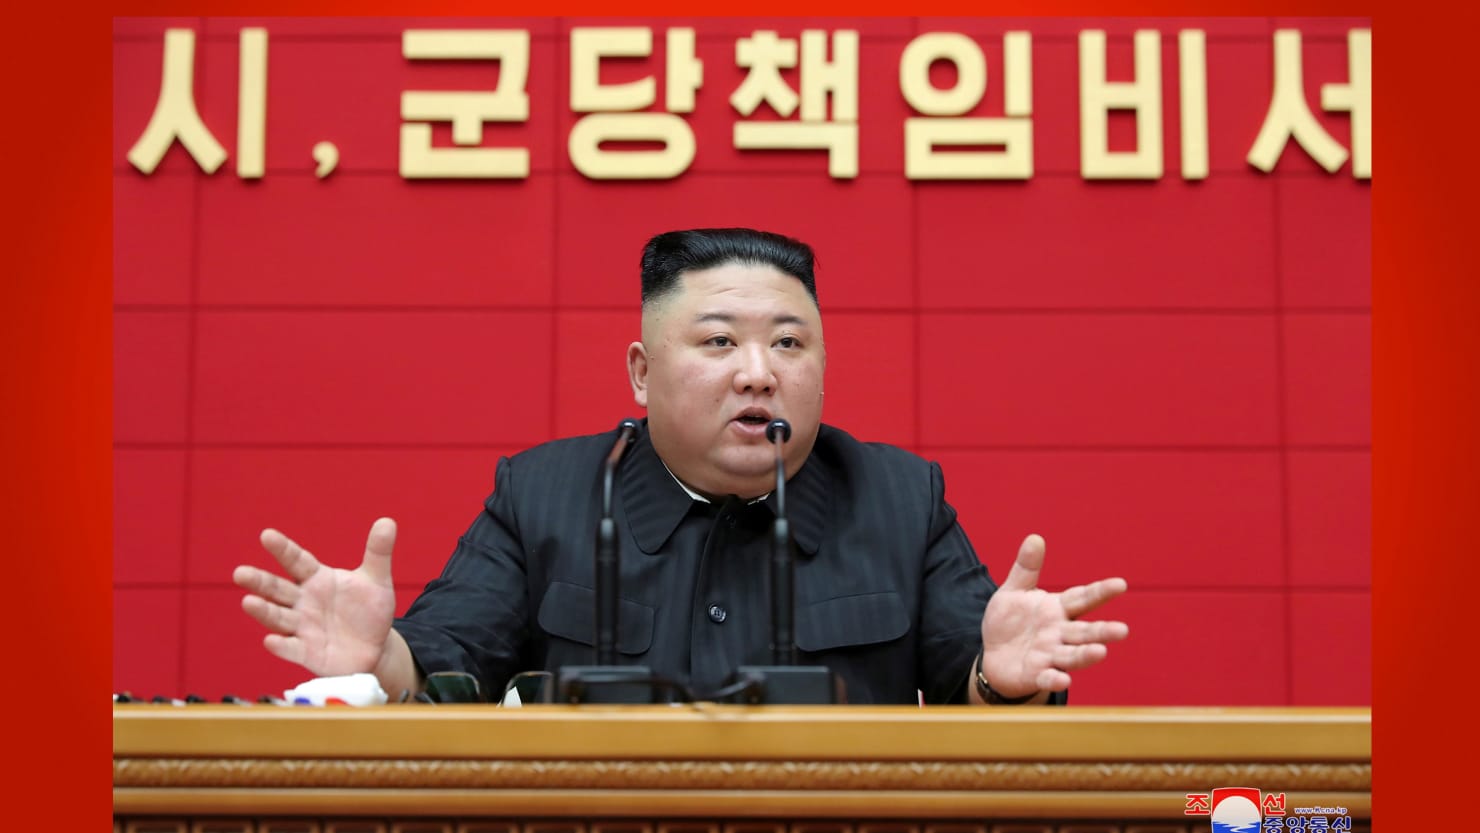 North Korean leader Kim Jong Un does not respond to Biden’s calls